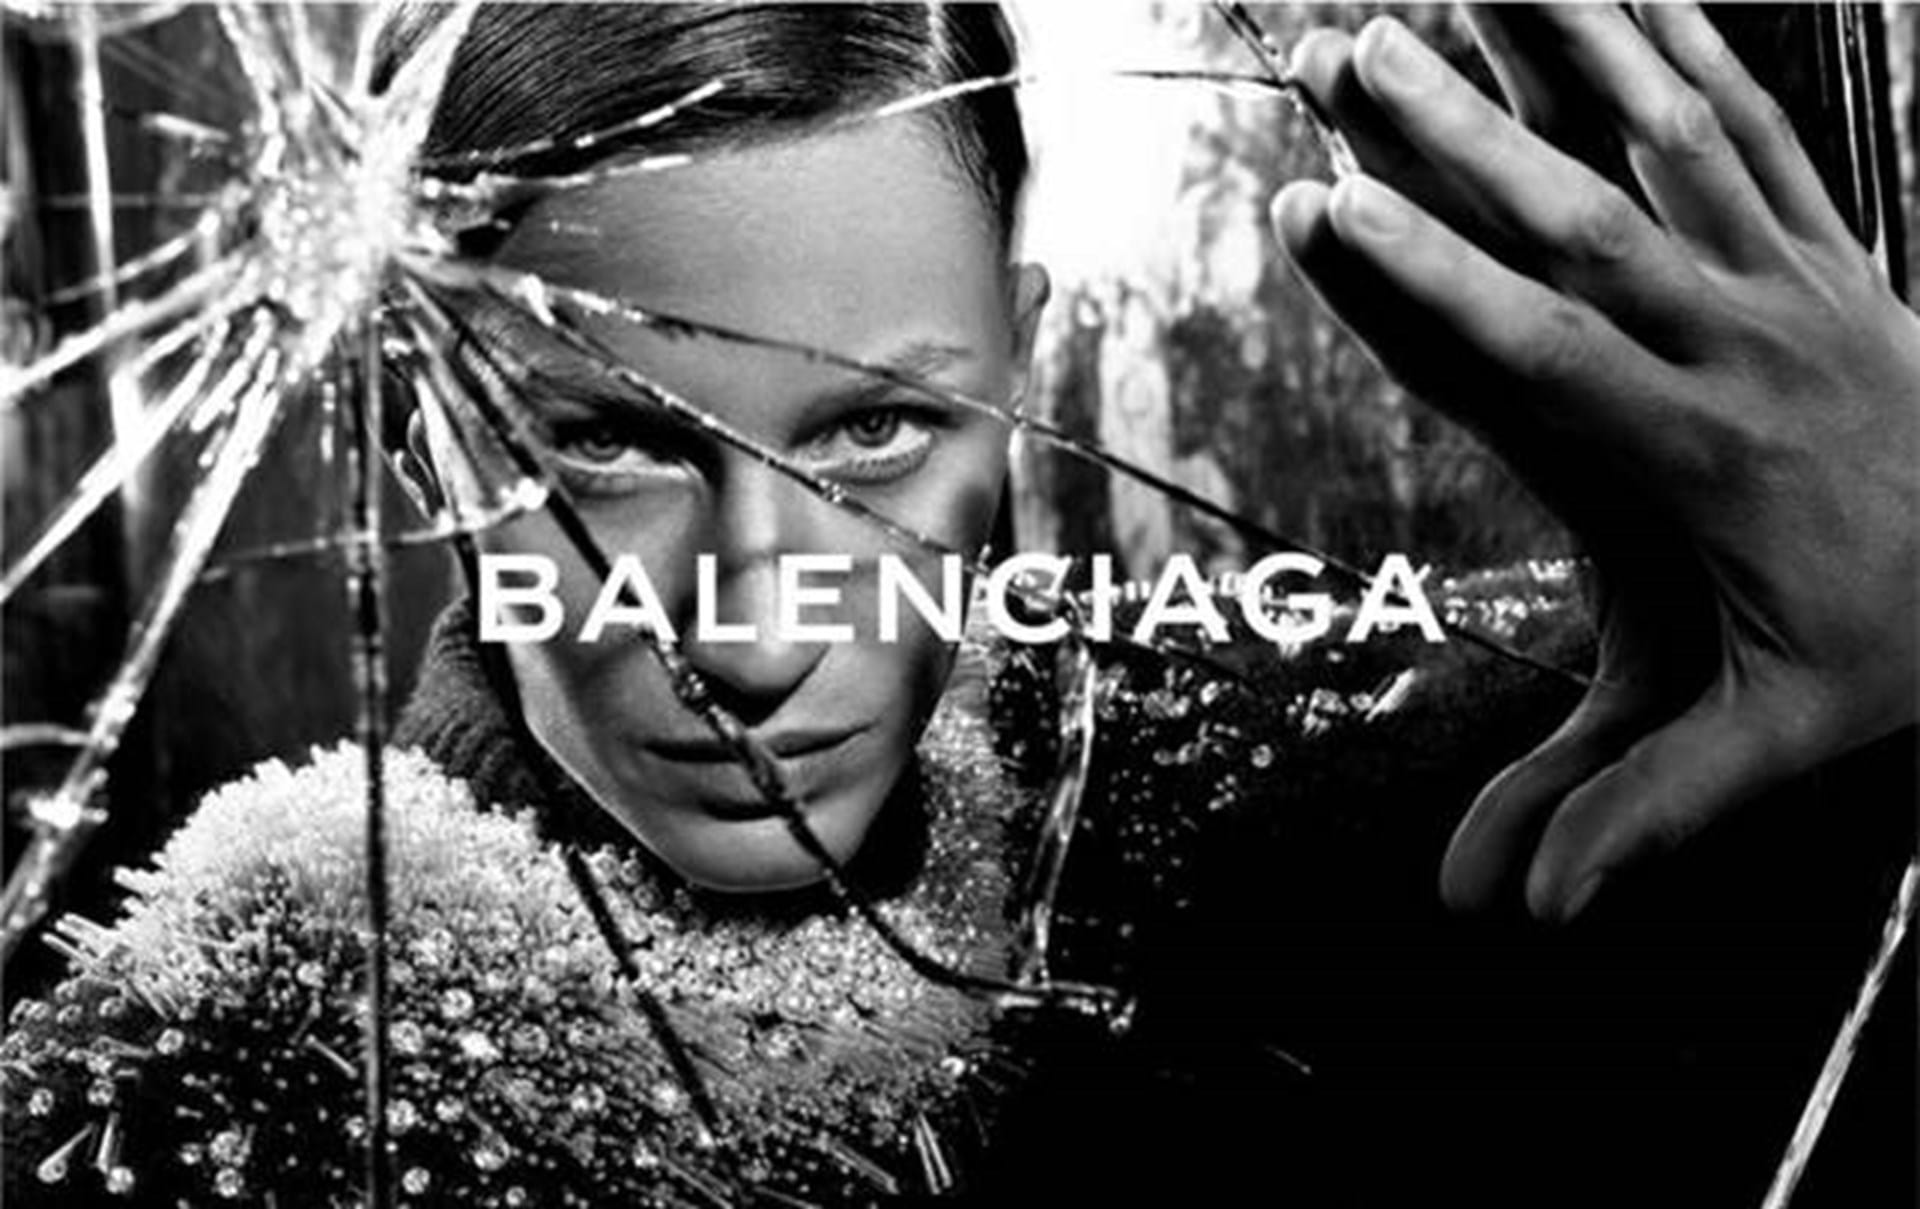 Balenciaga åbner i dag ny butik i København - Eurowoman -